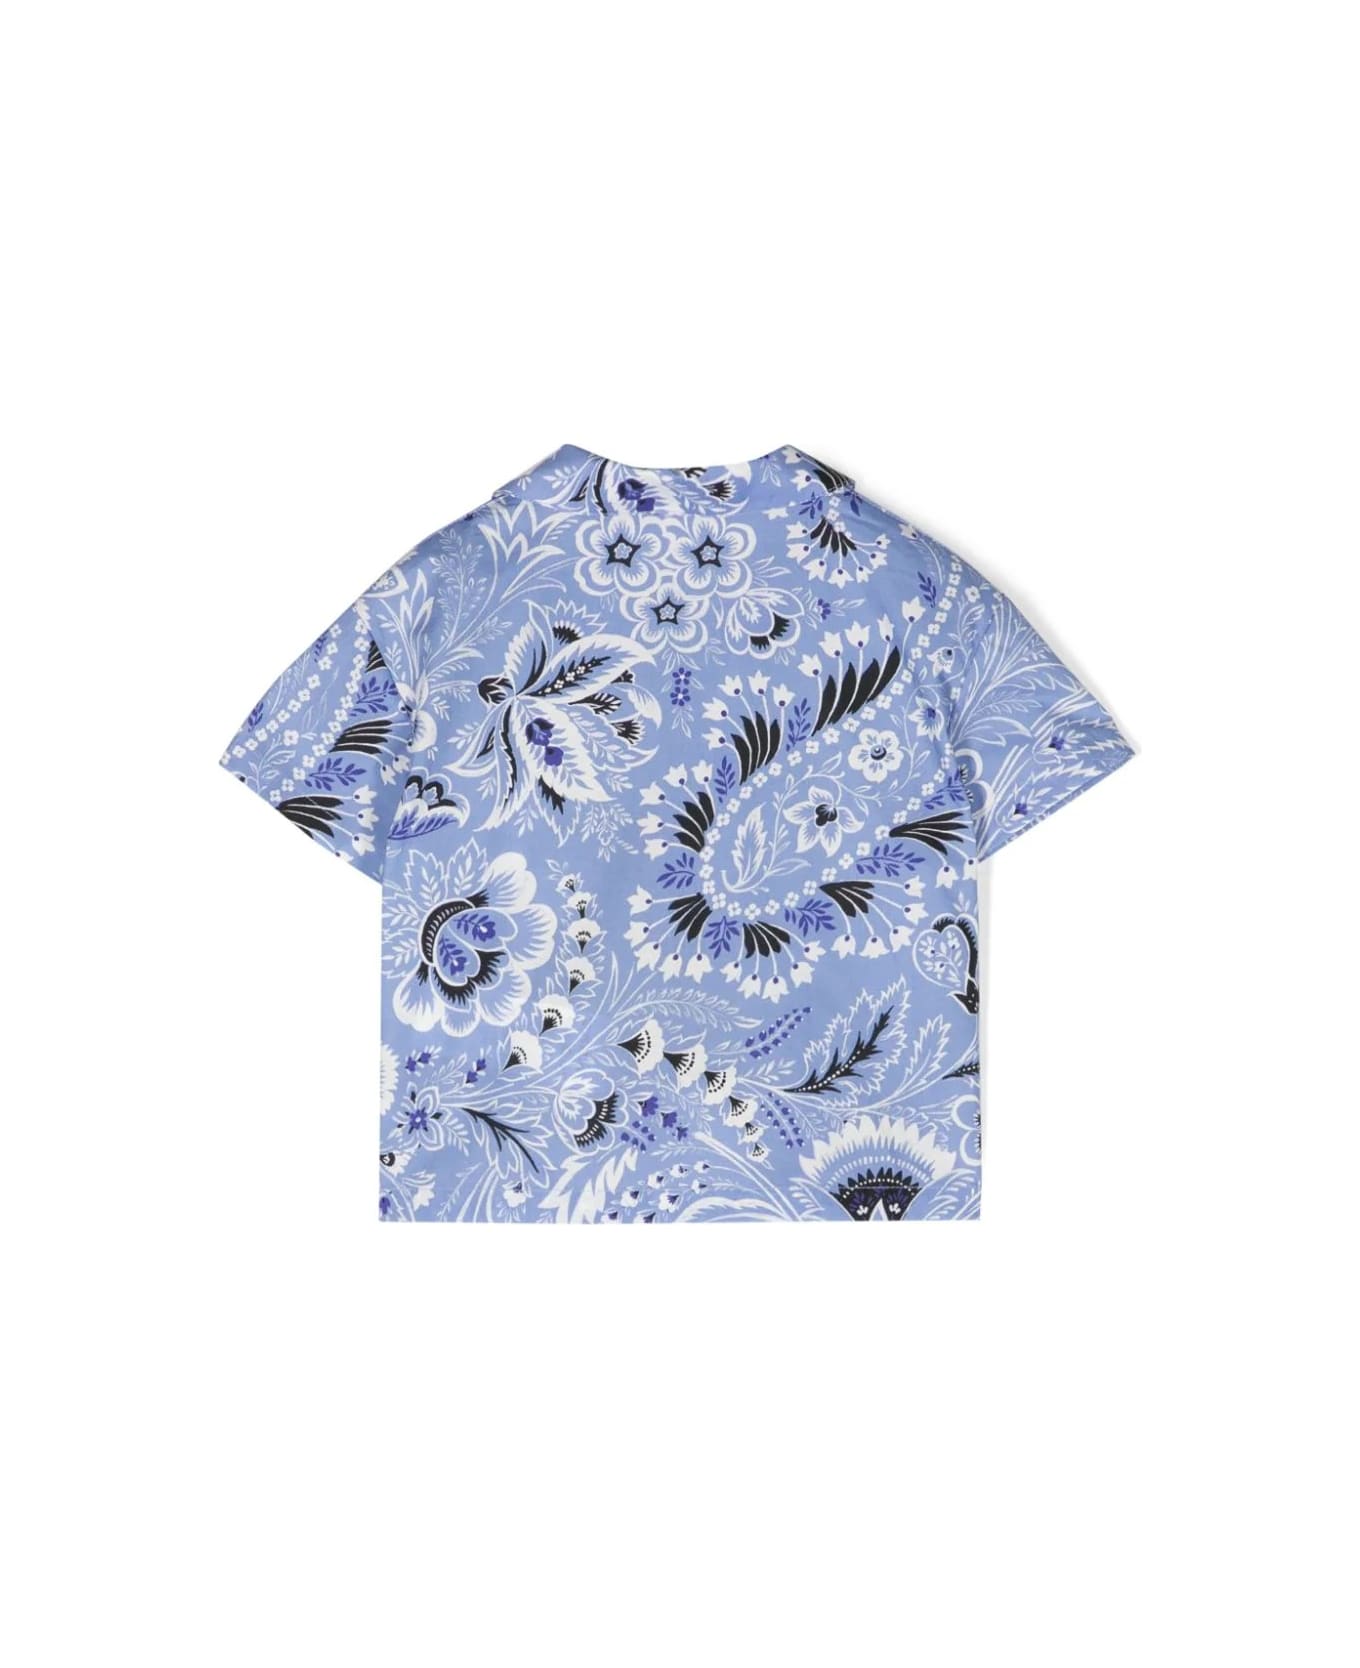 Etro Light Blue Bowling Shirt With Paisley Print - Blue